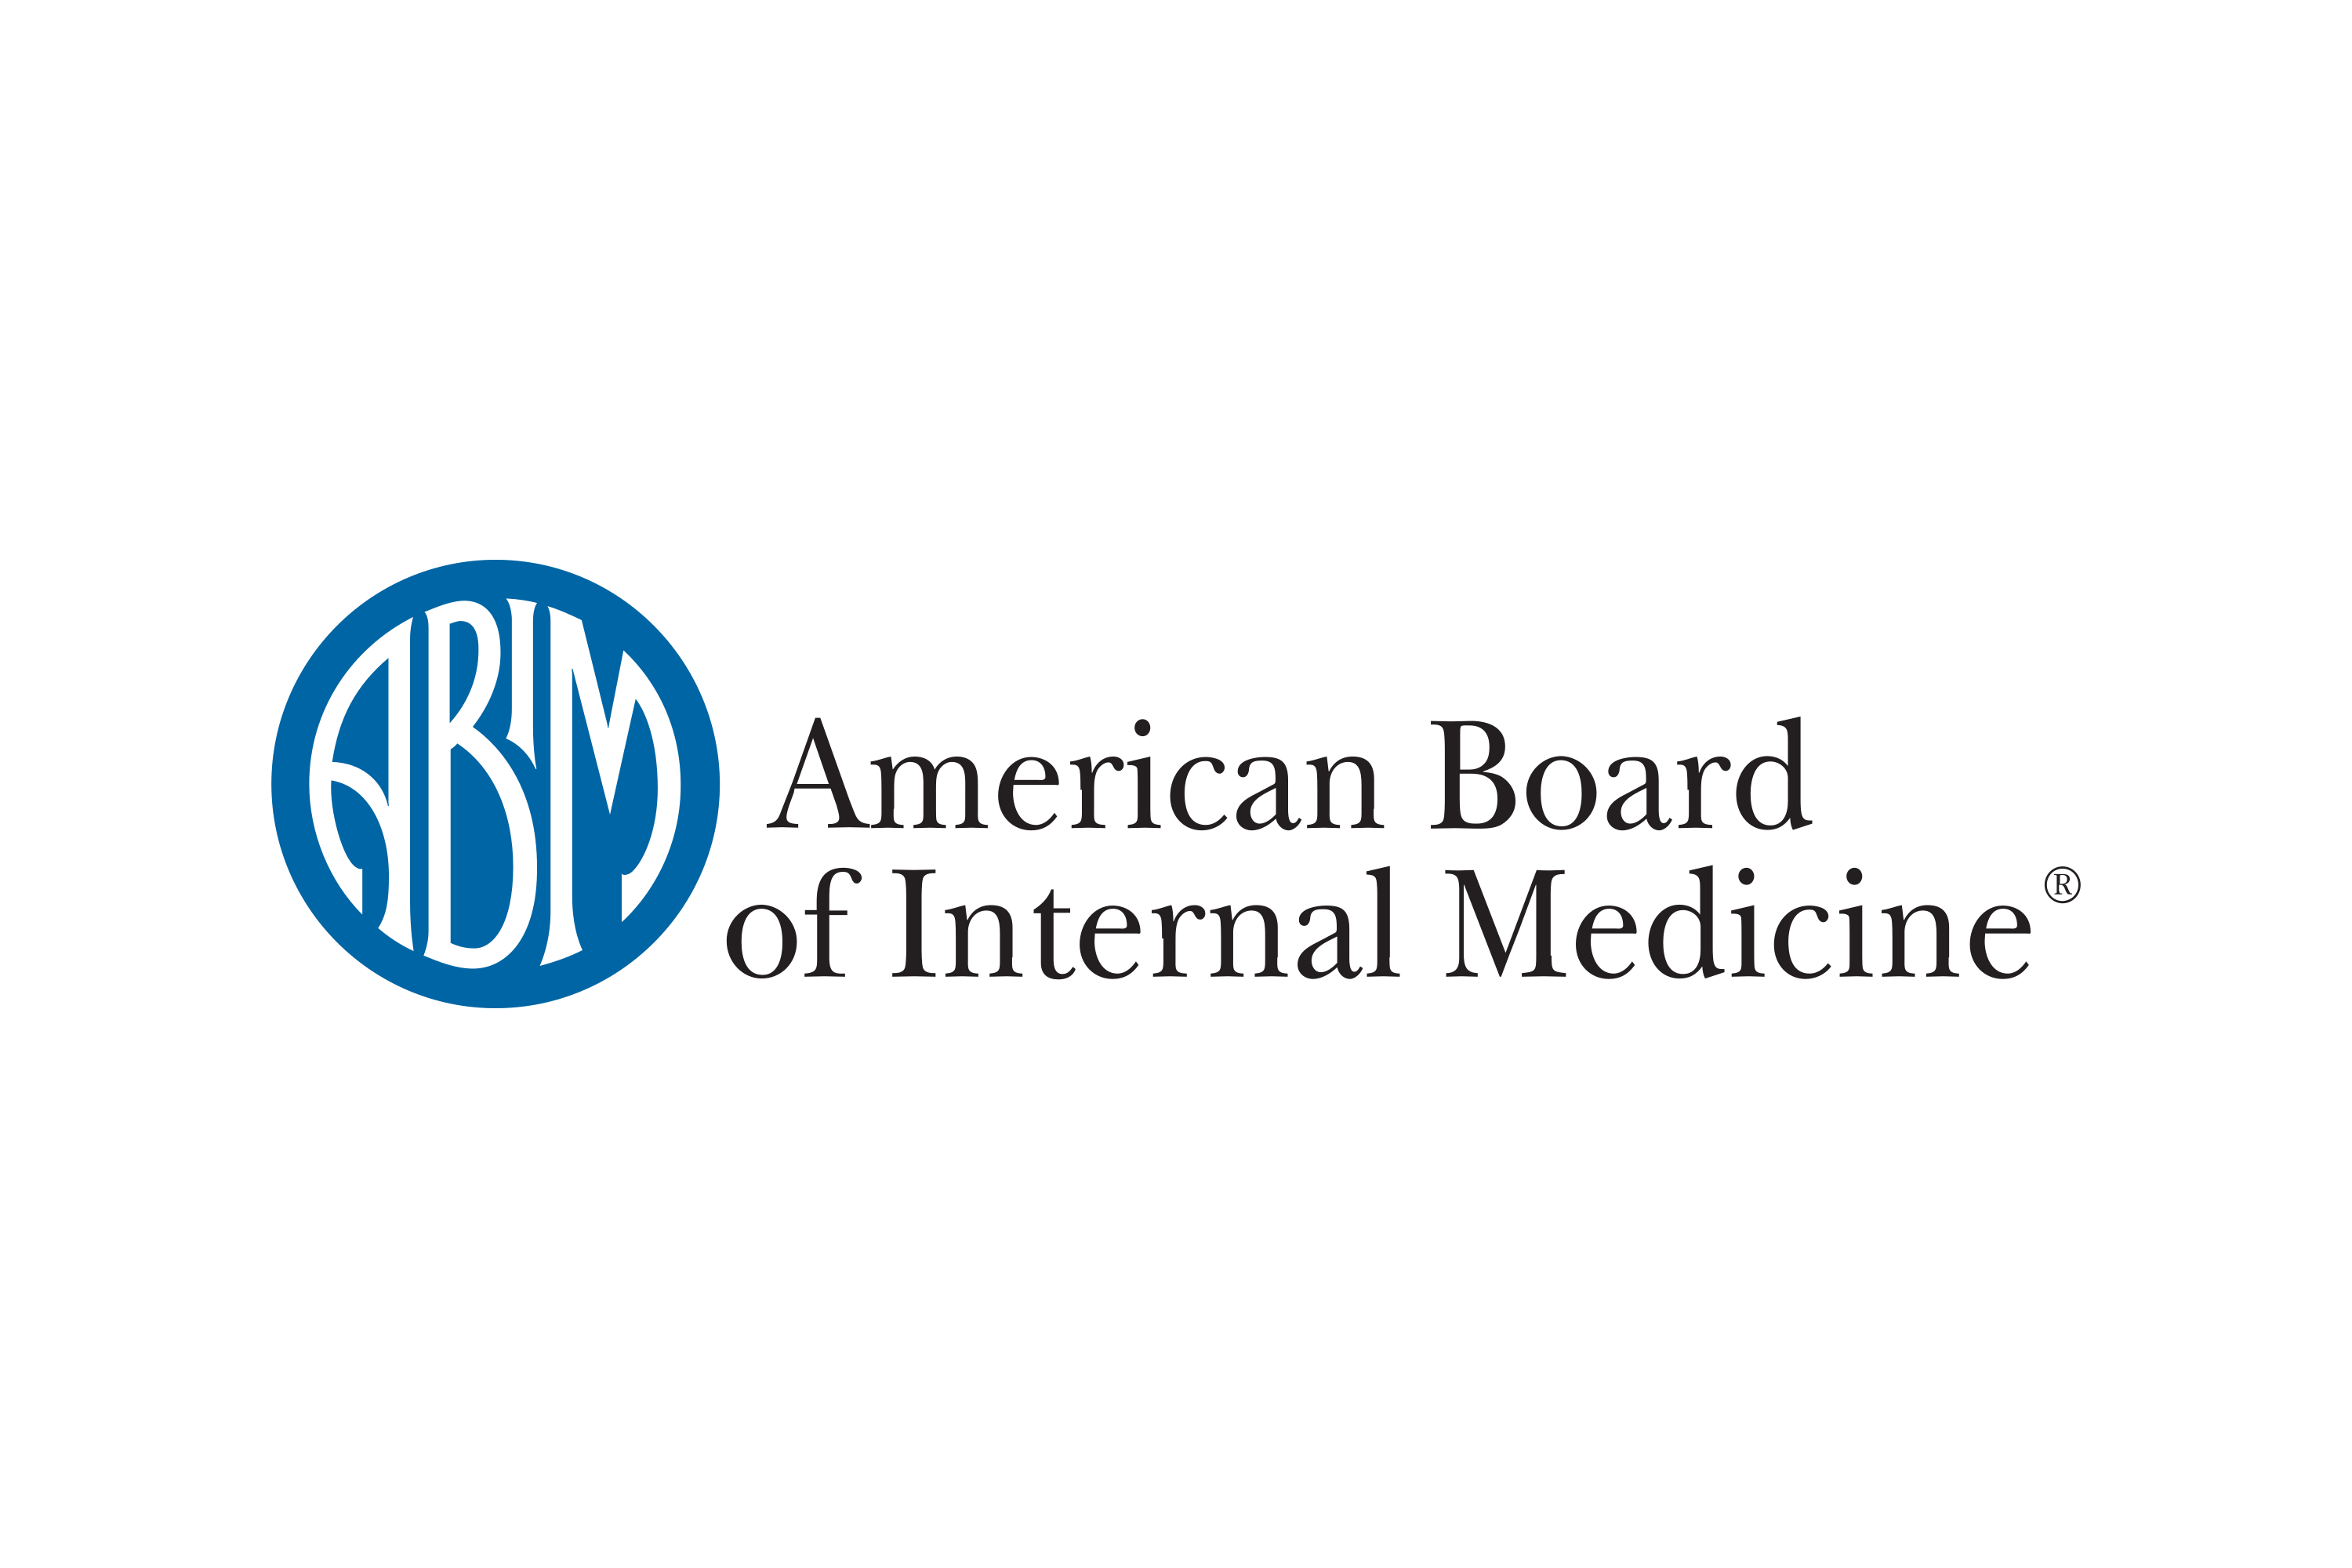 American Board of Internal Medicine logo, Get Us PPE partner